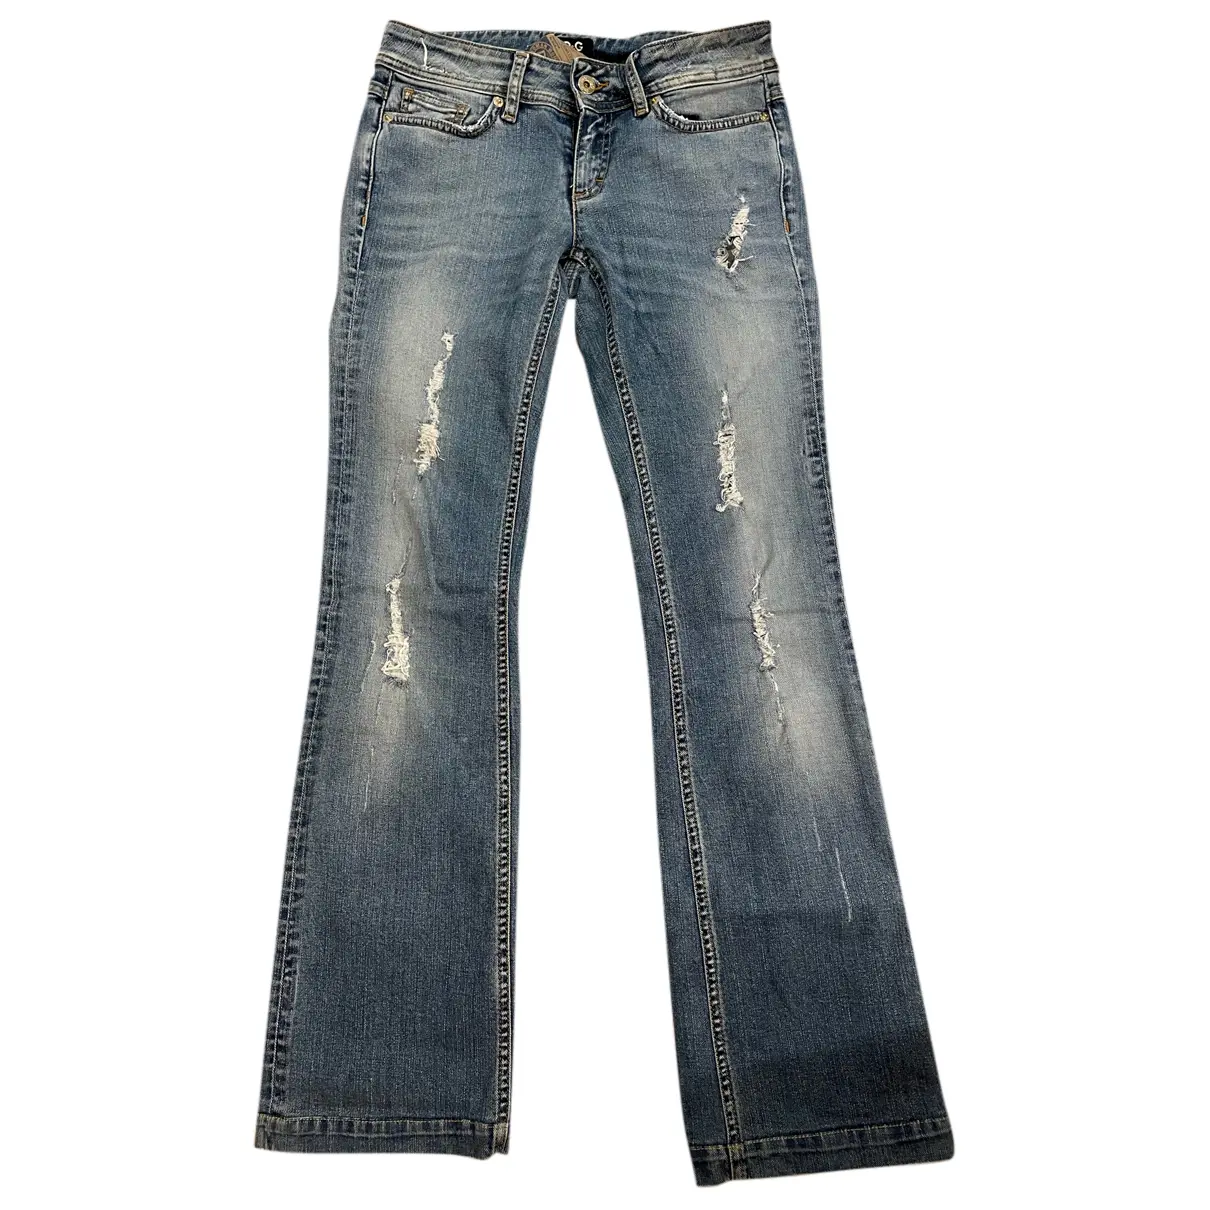 Bootcut jeans D&G